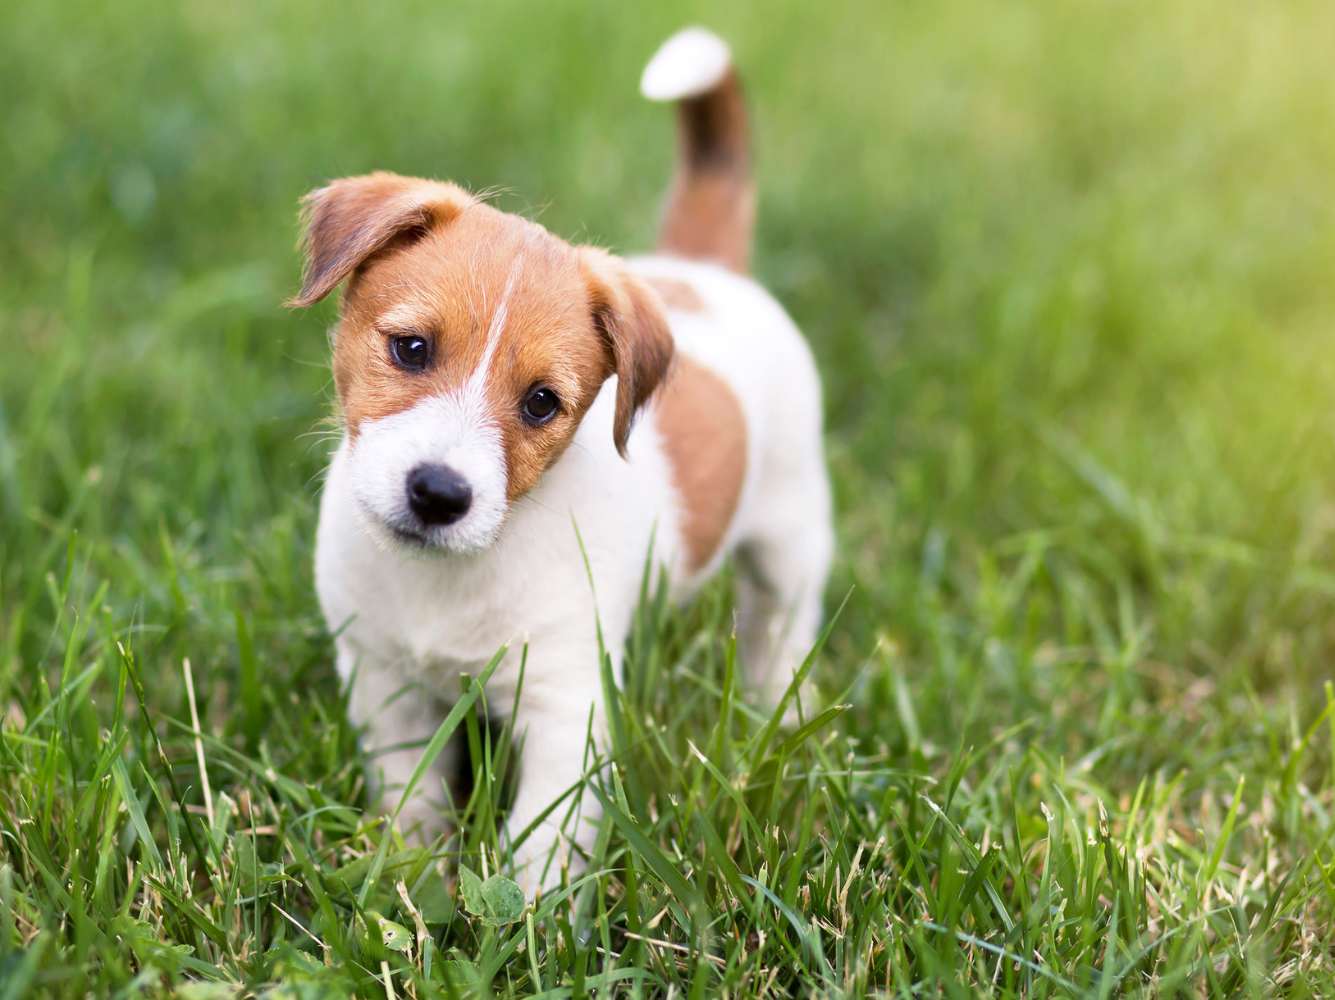 a cute dog standing in grass